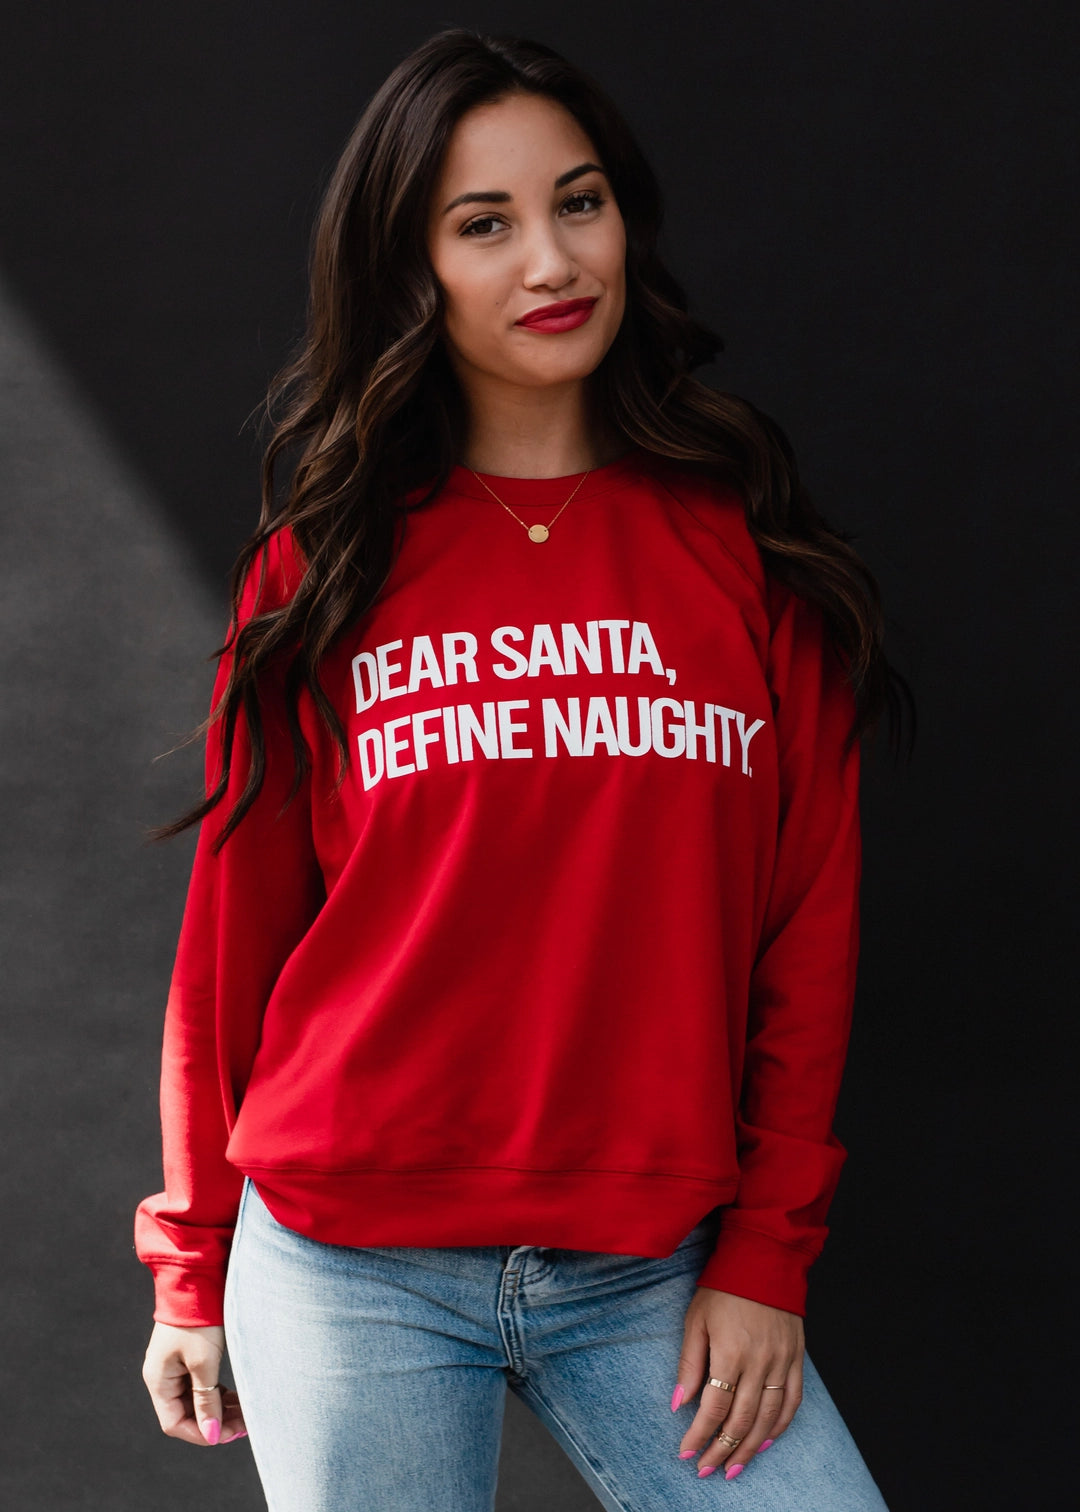 "Dear Santa, Define Naughty" Sweatshirt